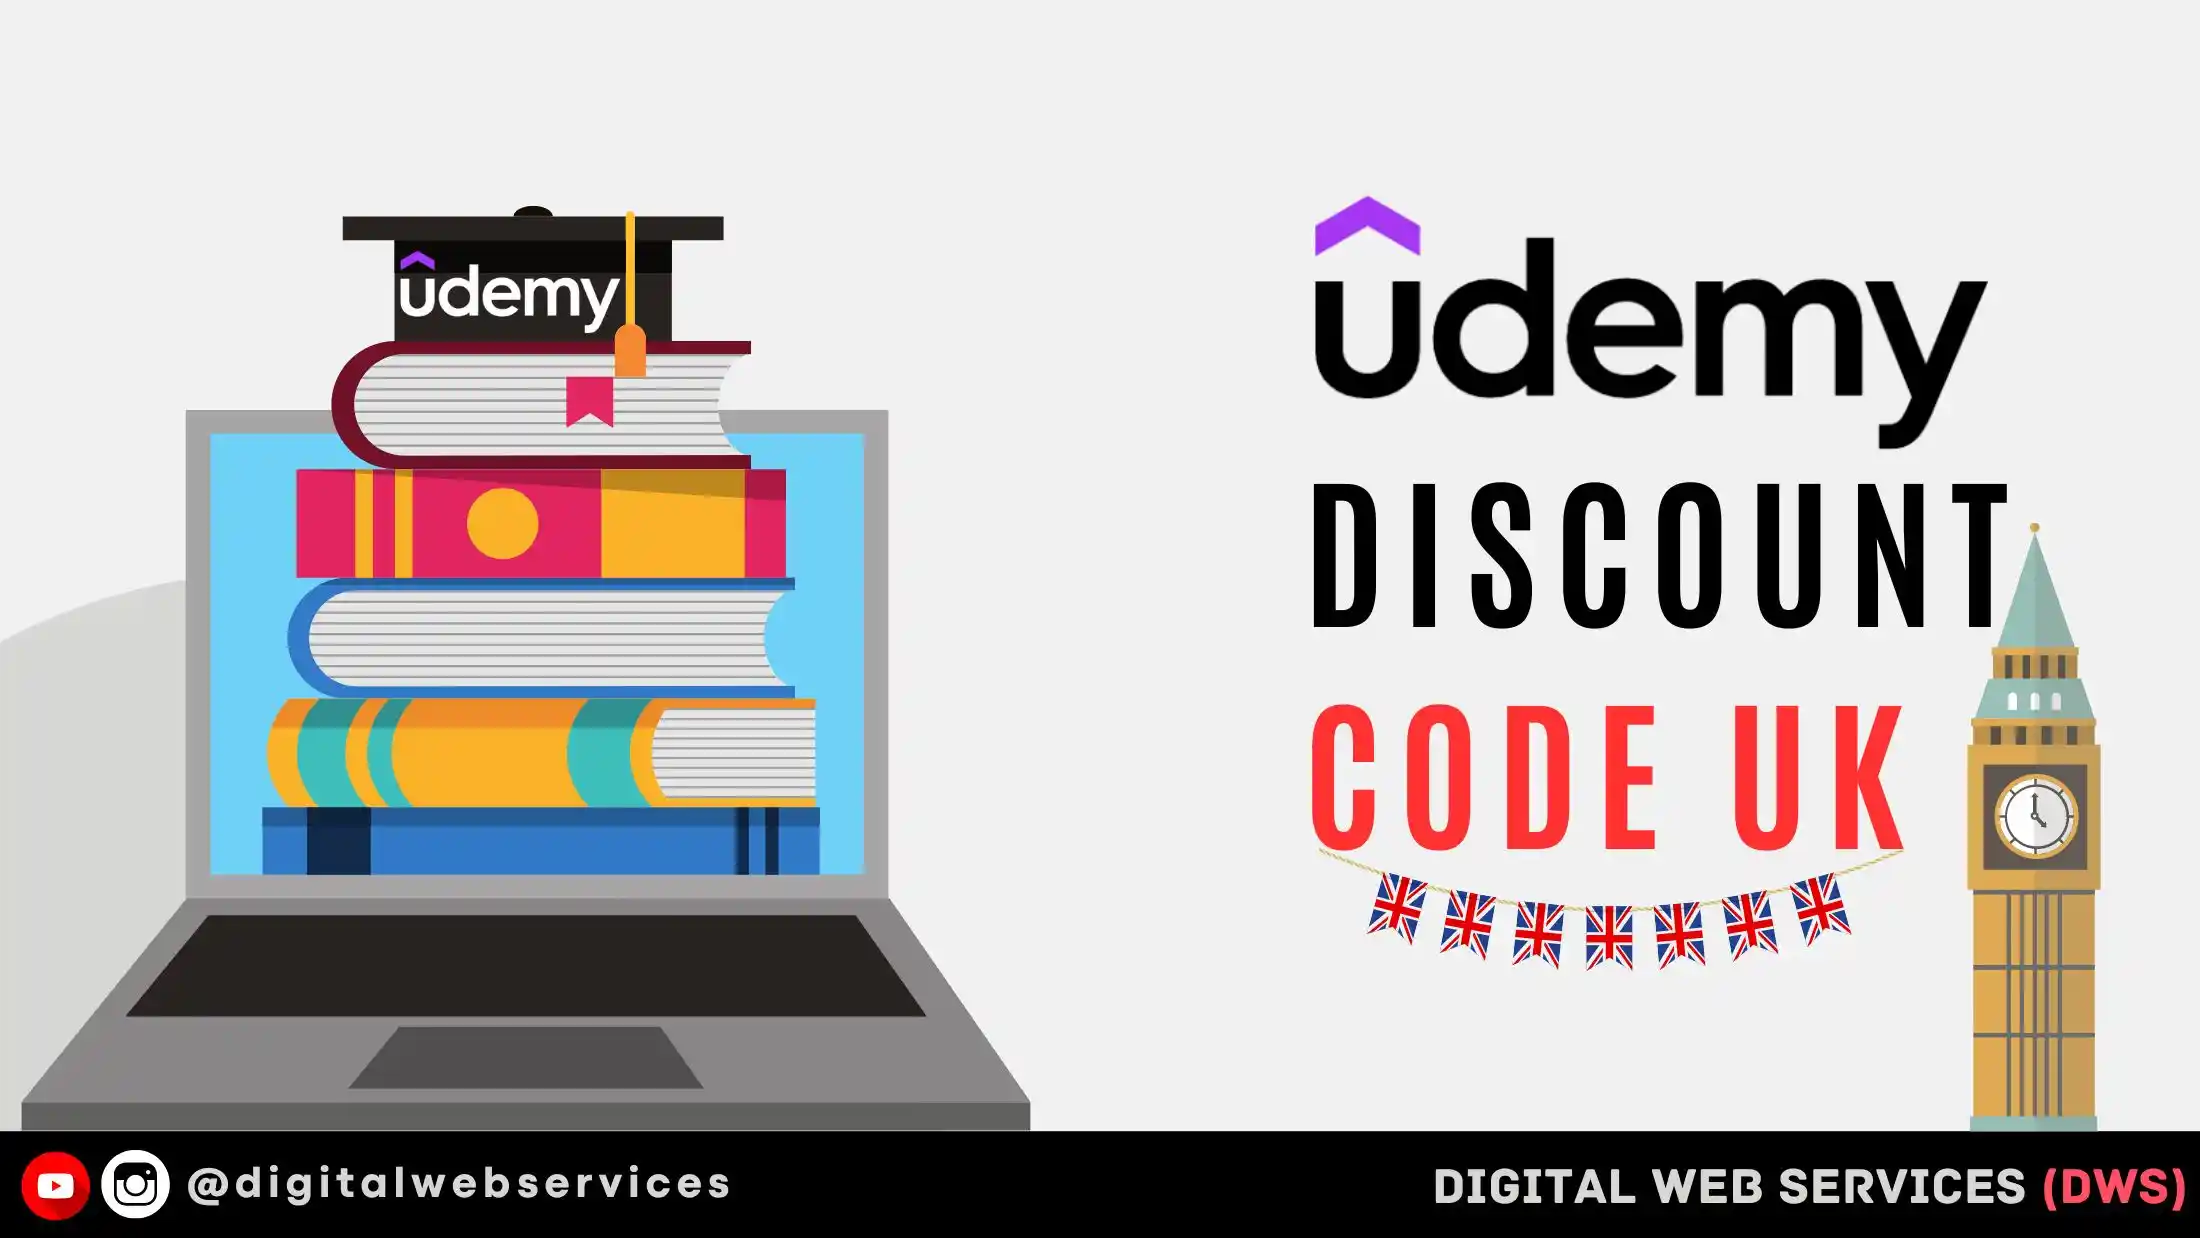 Udemy Discount Code UK